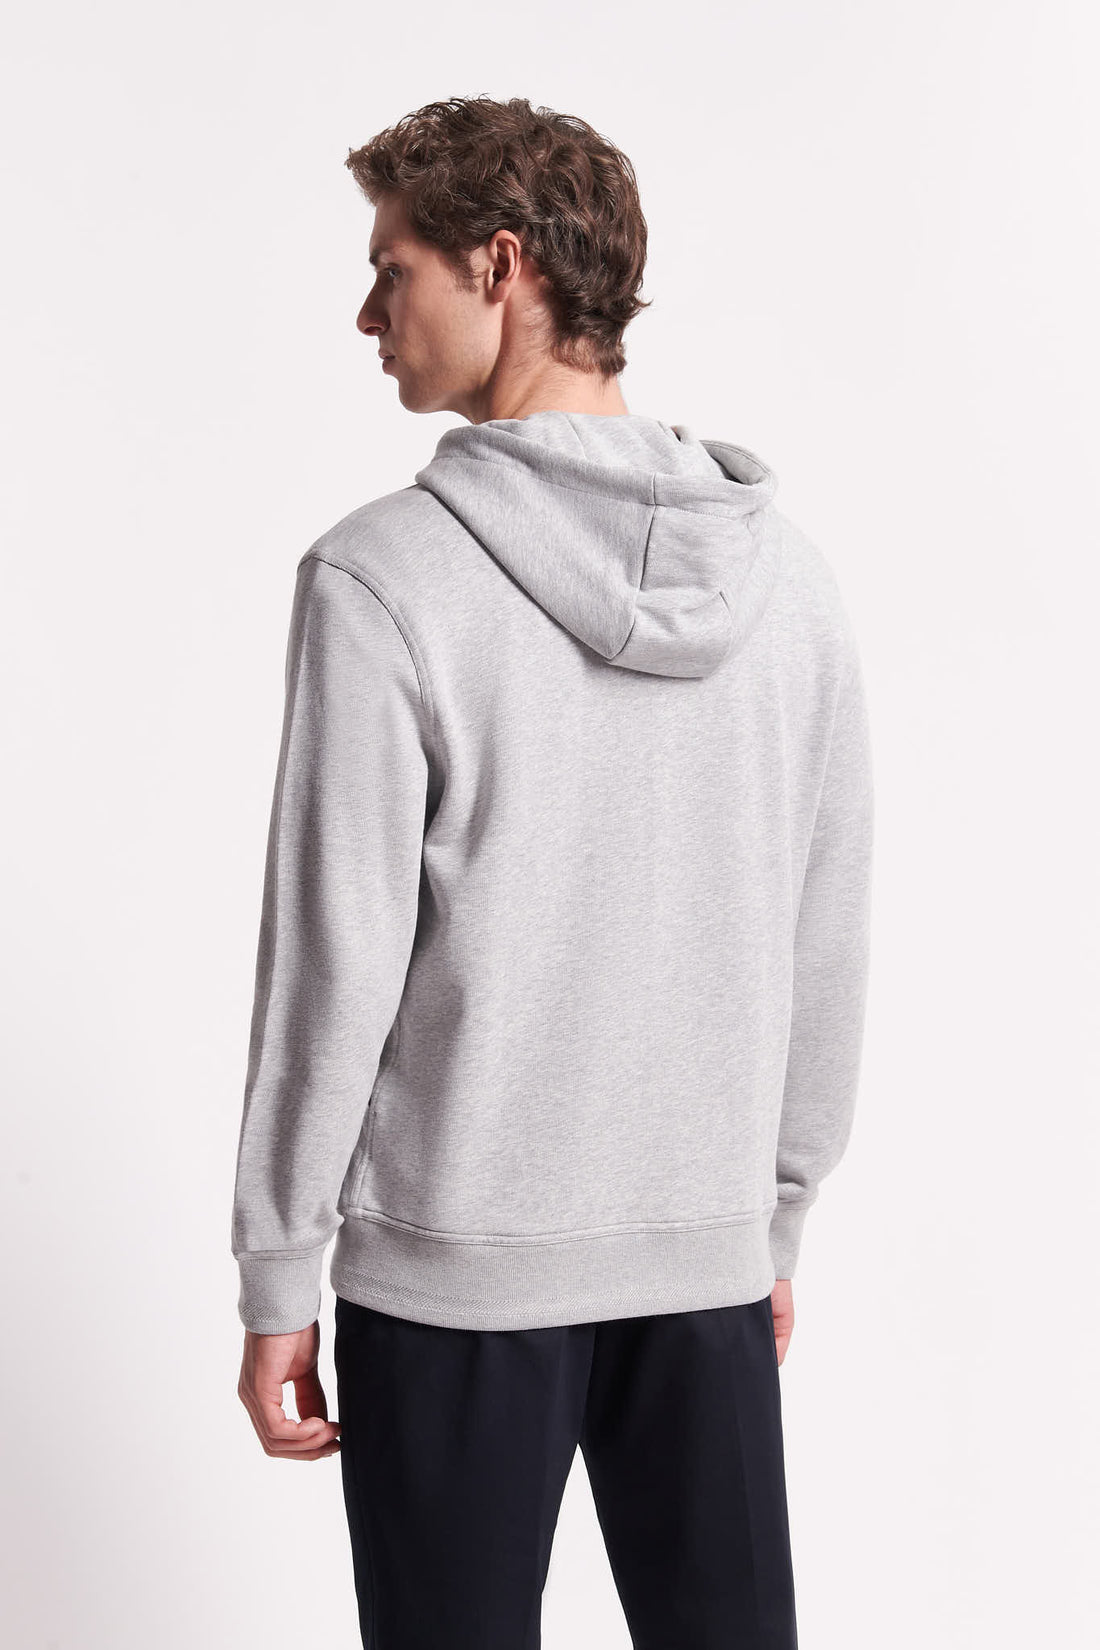 French Terry Zip Through Hooded Sweatshirt in Grey Marl